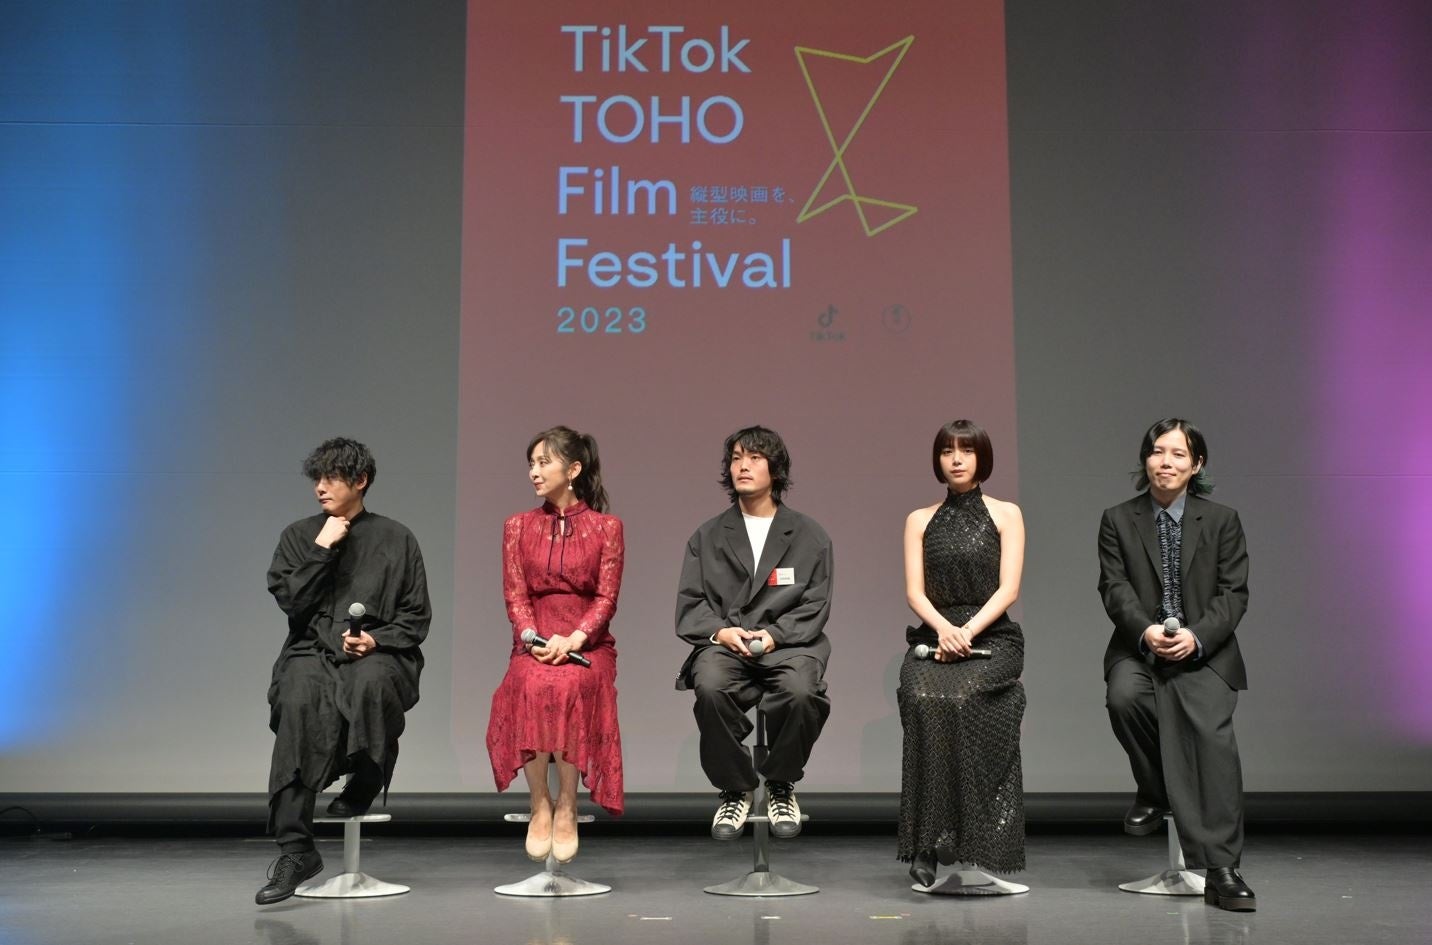 wTikTok TOHO Film Festival 2023xOv͓˔@L^o̐S`uяv܁IrcGCUuǂǂc^f̓؂JĂقIv